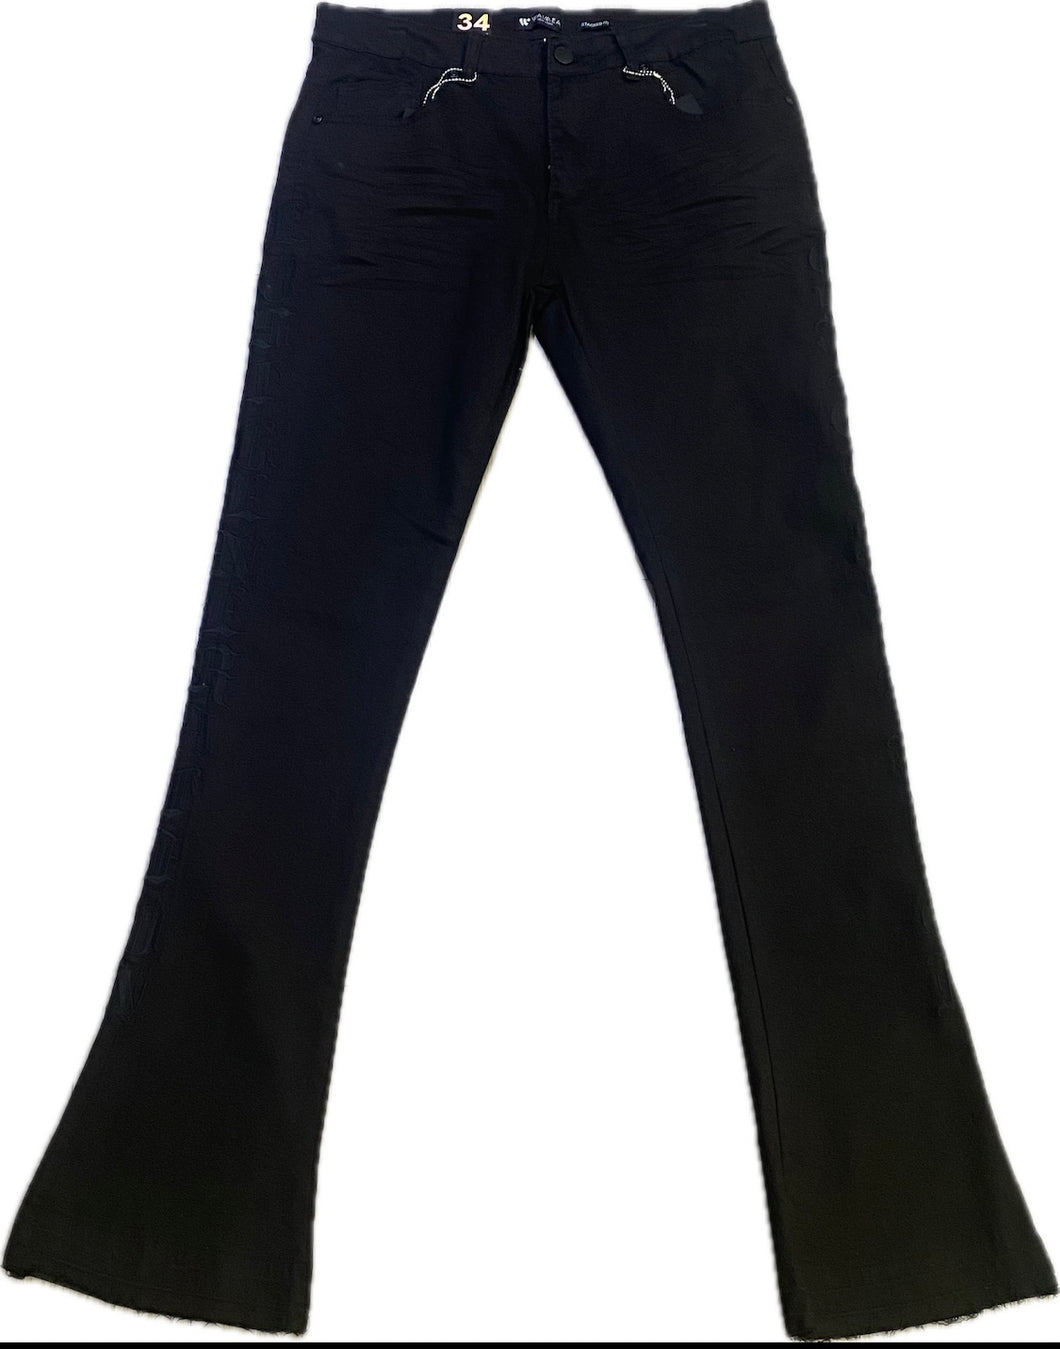 Men’s Waimea Stacked Fit Jet Black Jeans